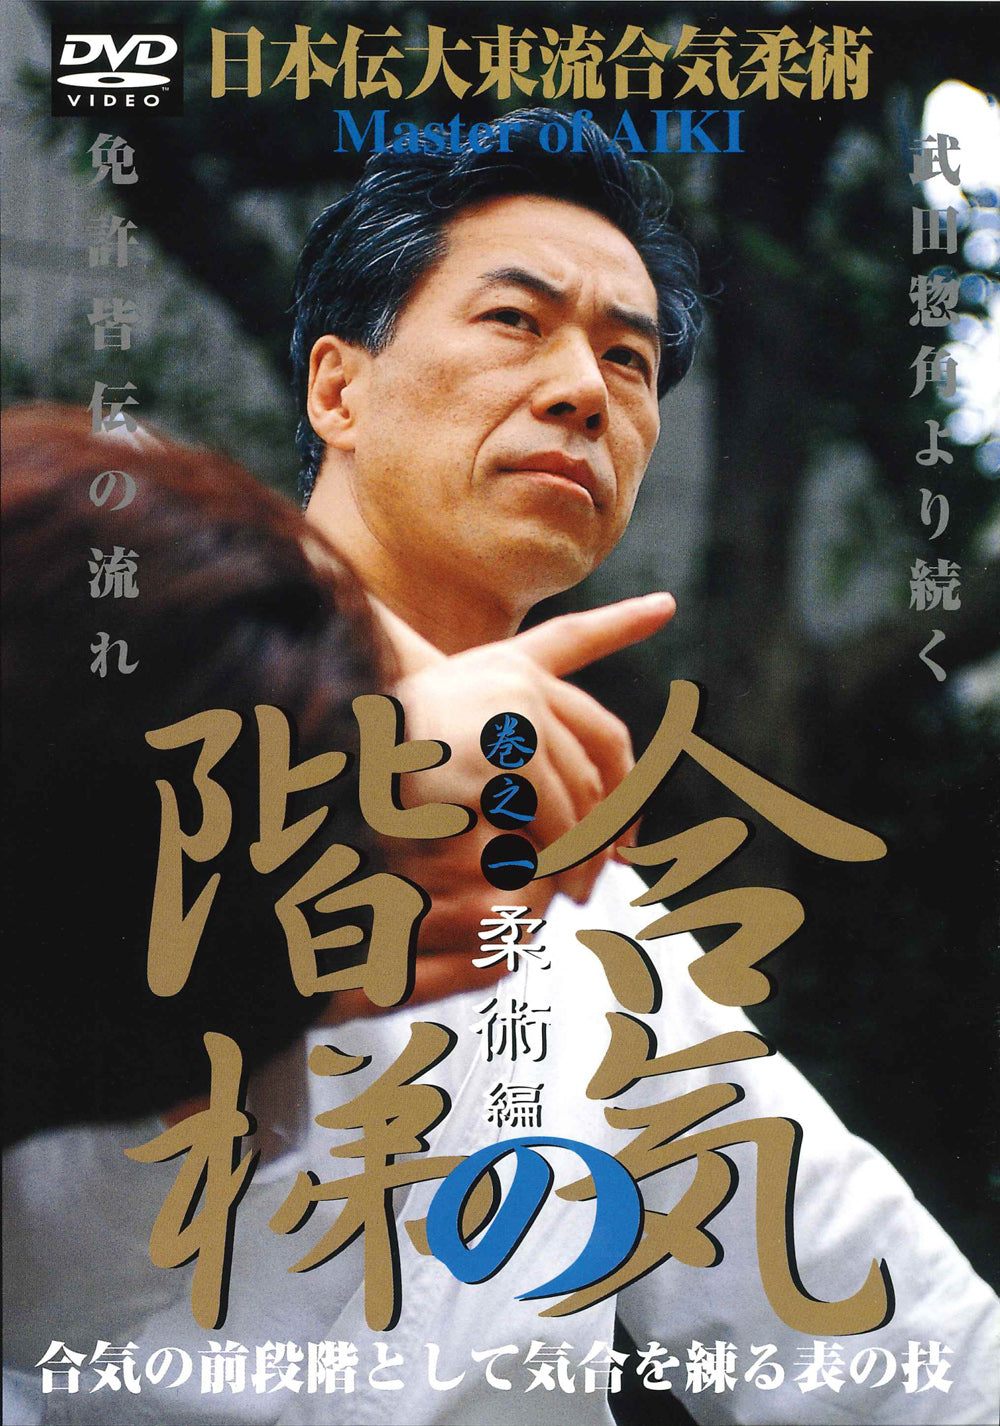 Master of Aiki DVD 1 by 菅沢高原